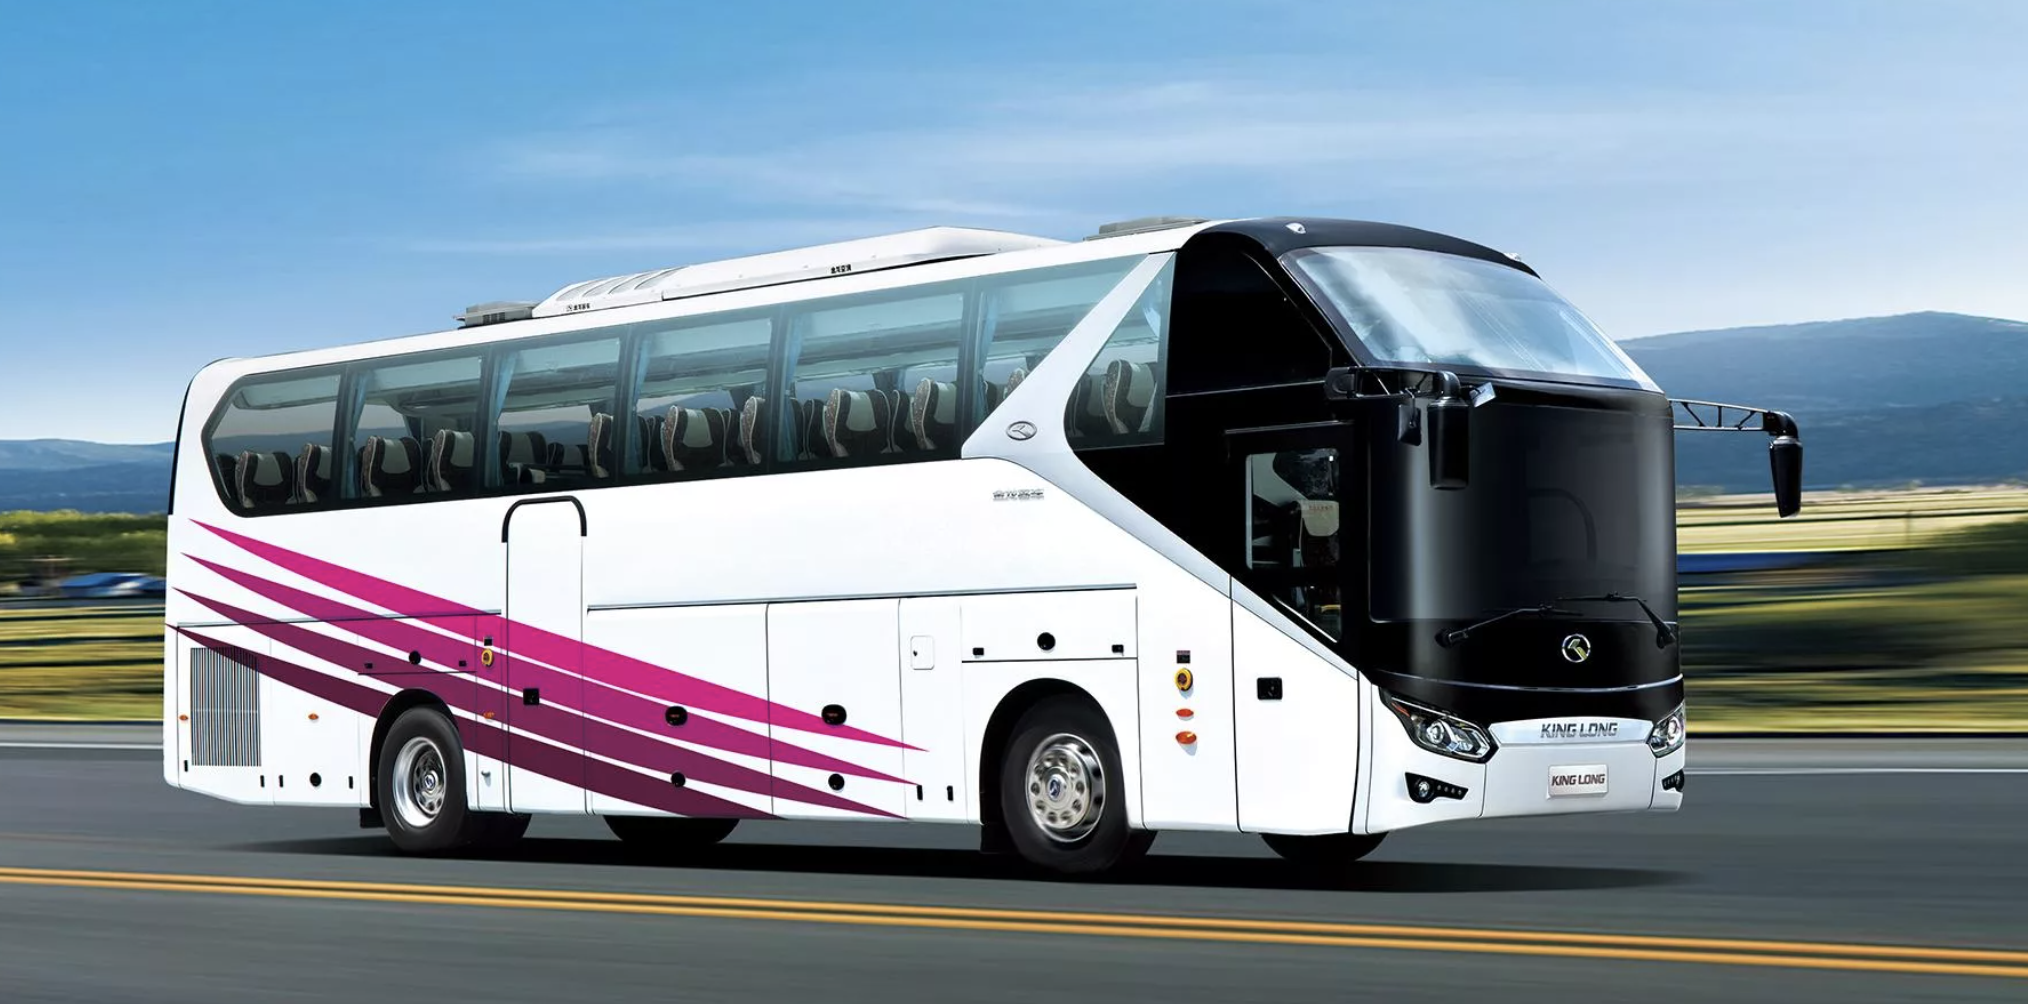 Автобусы Кинг Лонг пассажирские. Туристический автобус Кинг Лонг. Кинг Лонг автобус 2021 года. Туристические автобусы Кинг Лонг 45 мест. Транспортная межгород